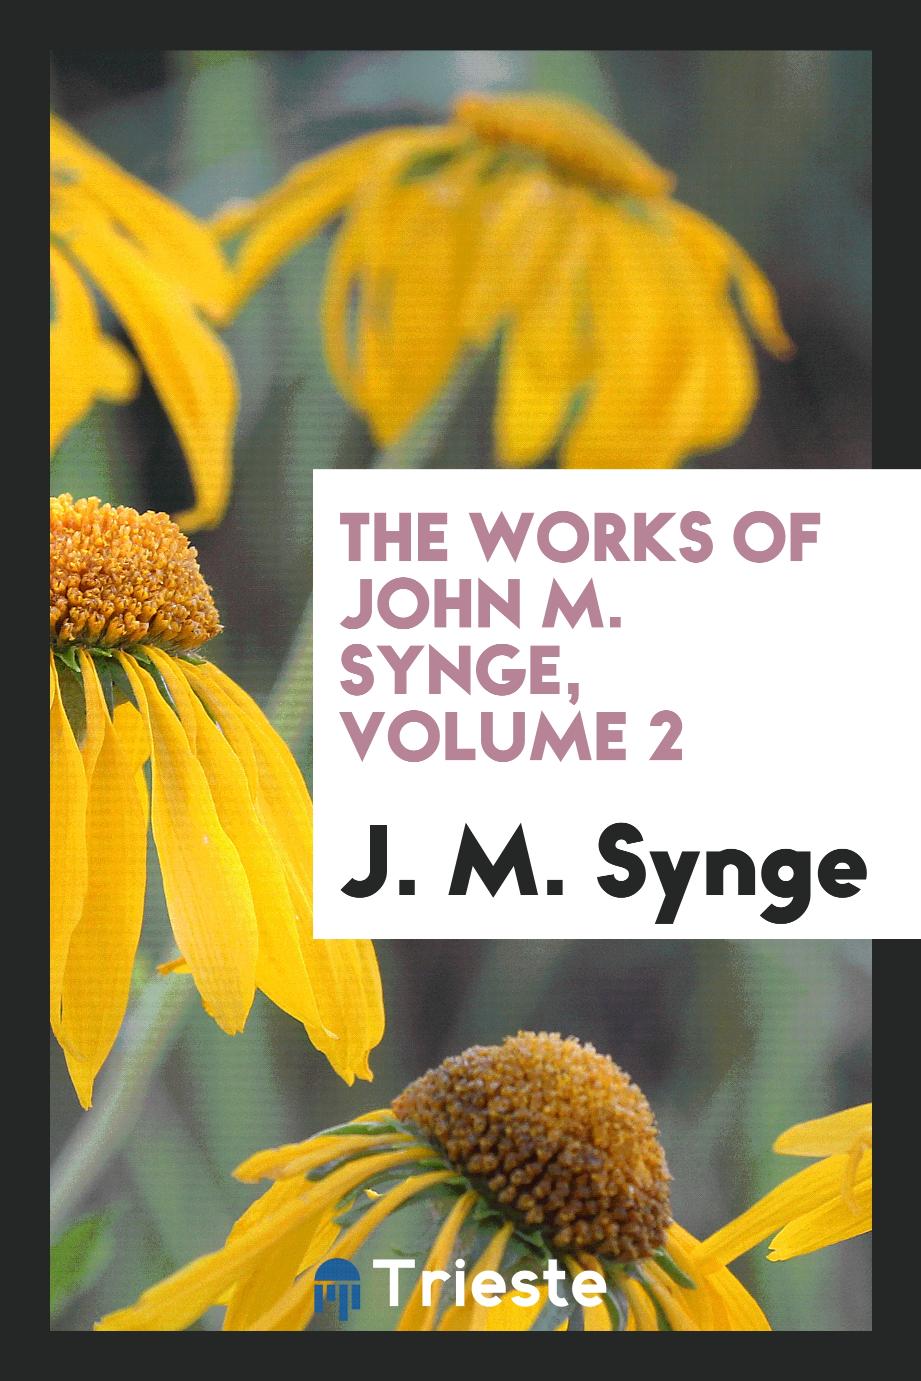 The works of John M. Synge, Volume 2